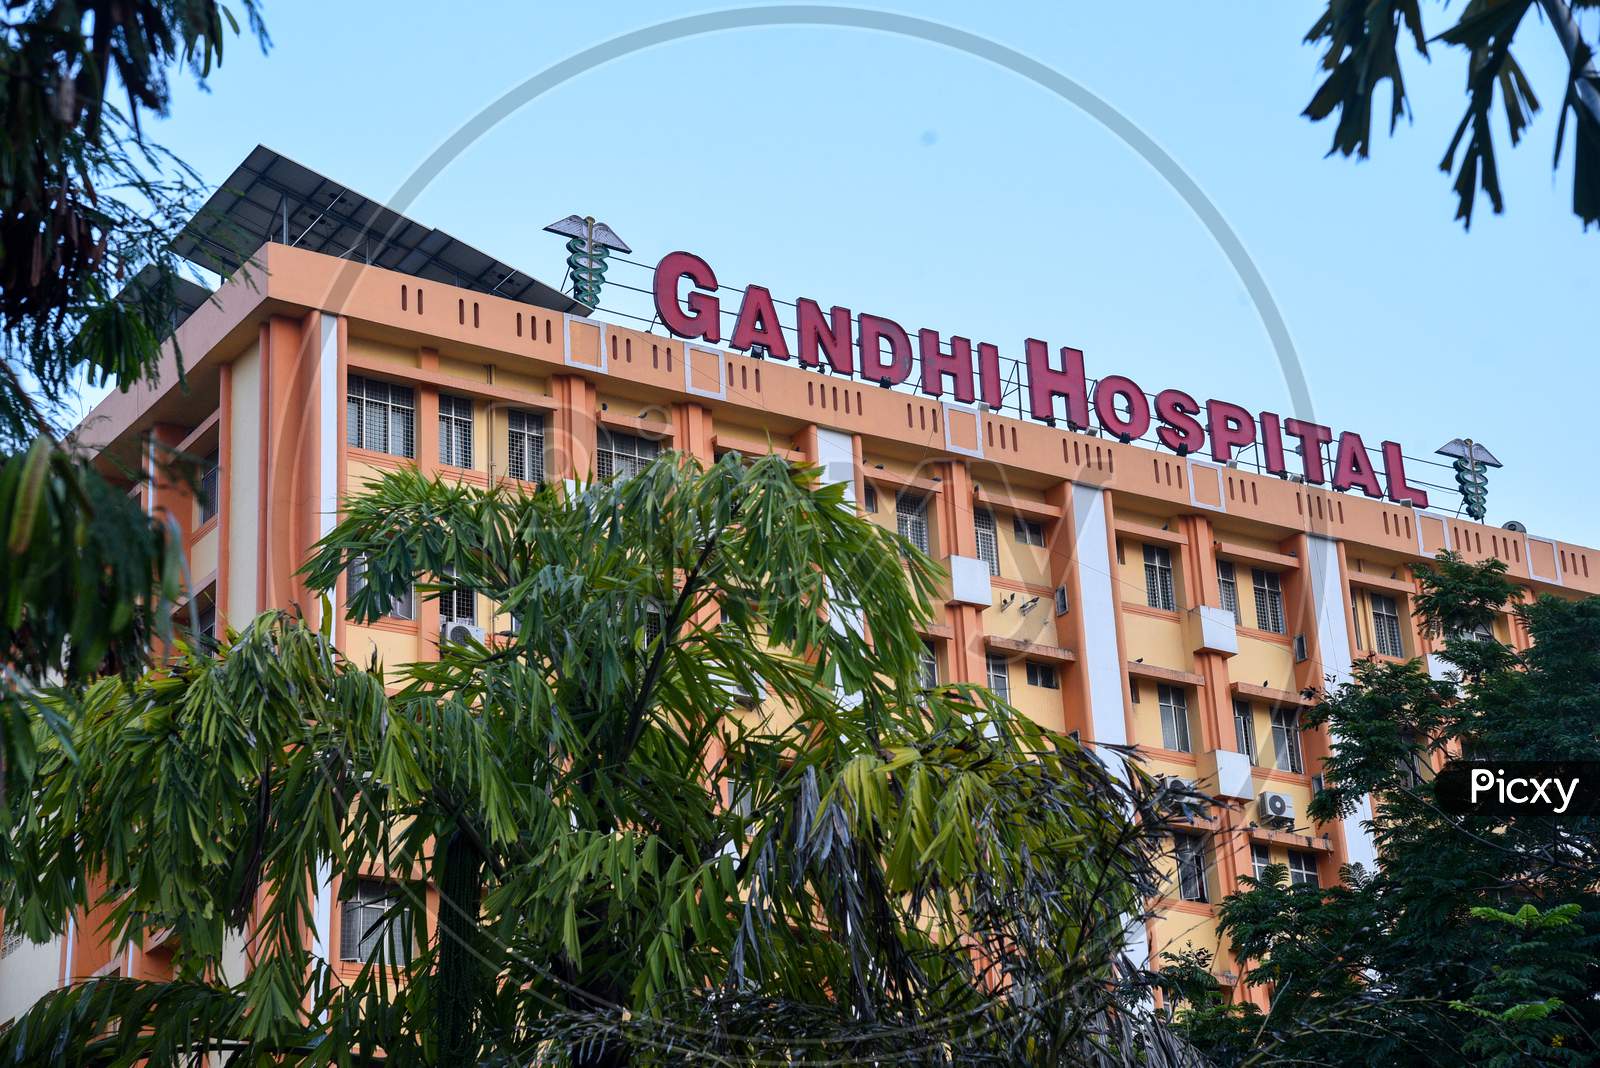 Gandhi Hospital,Hyderabad